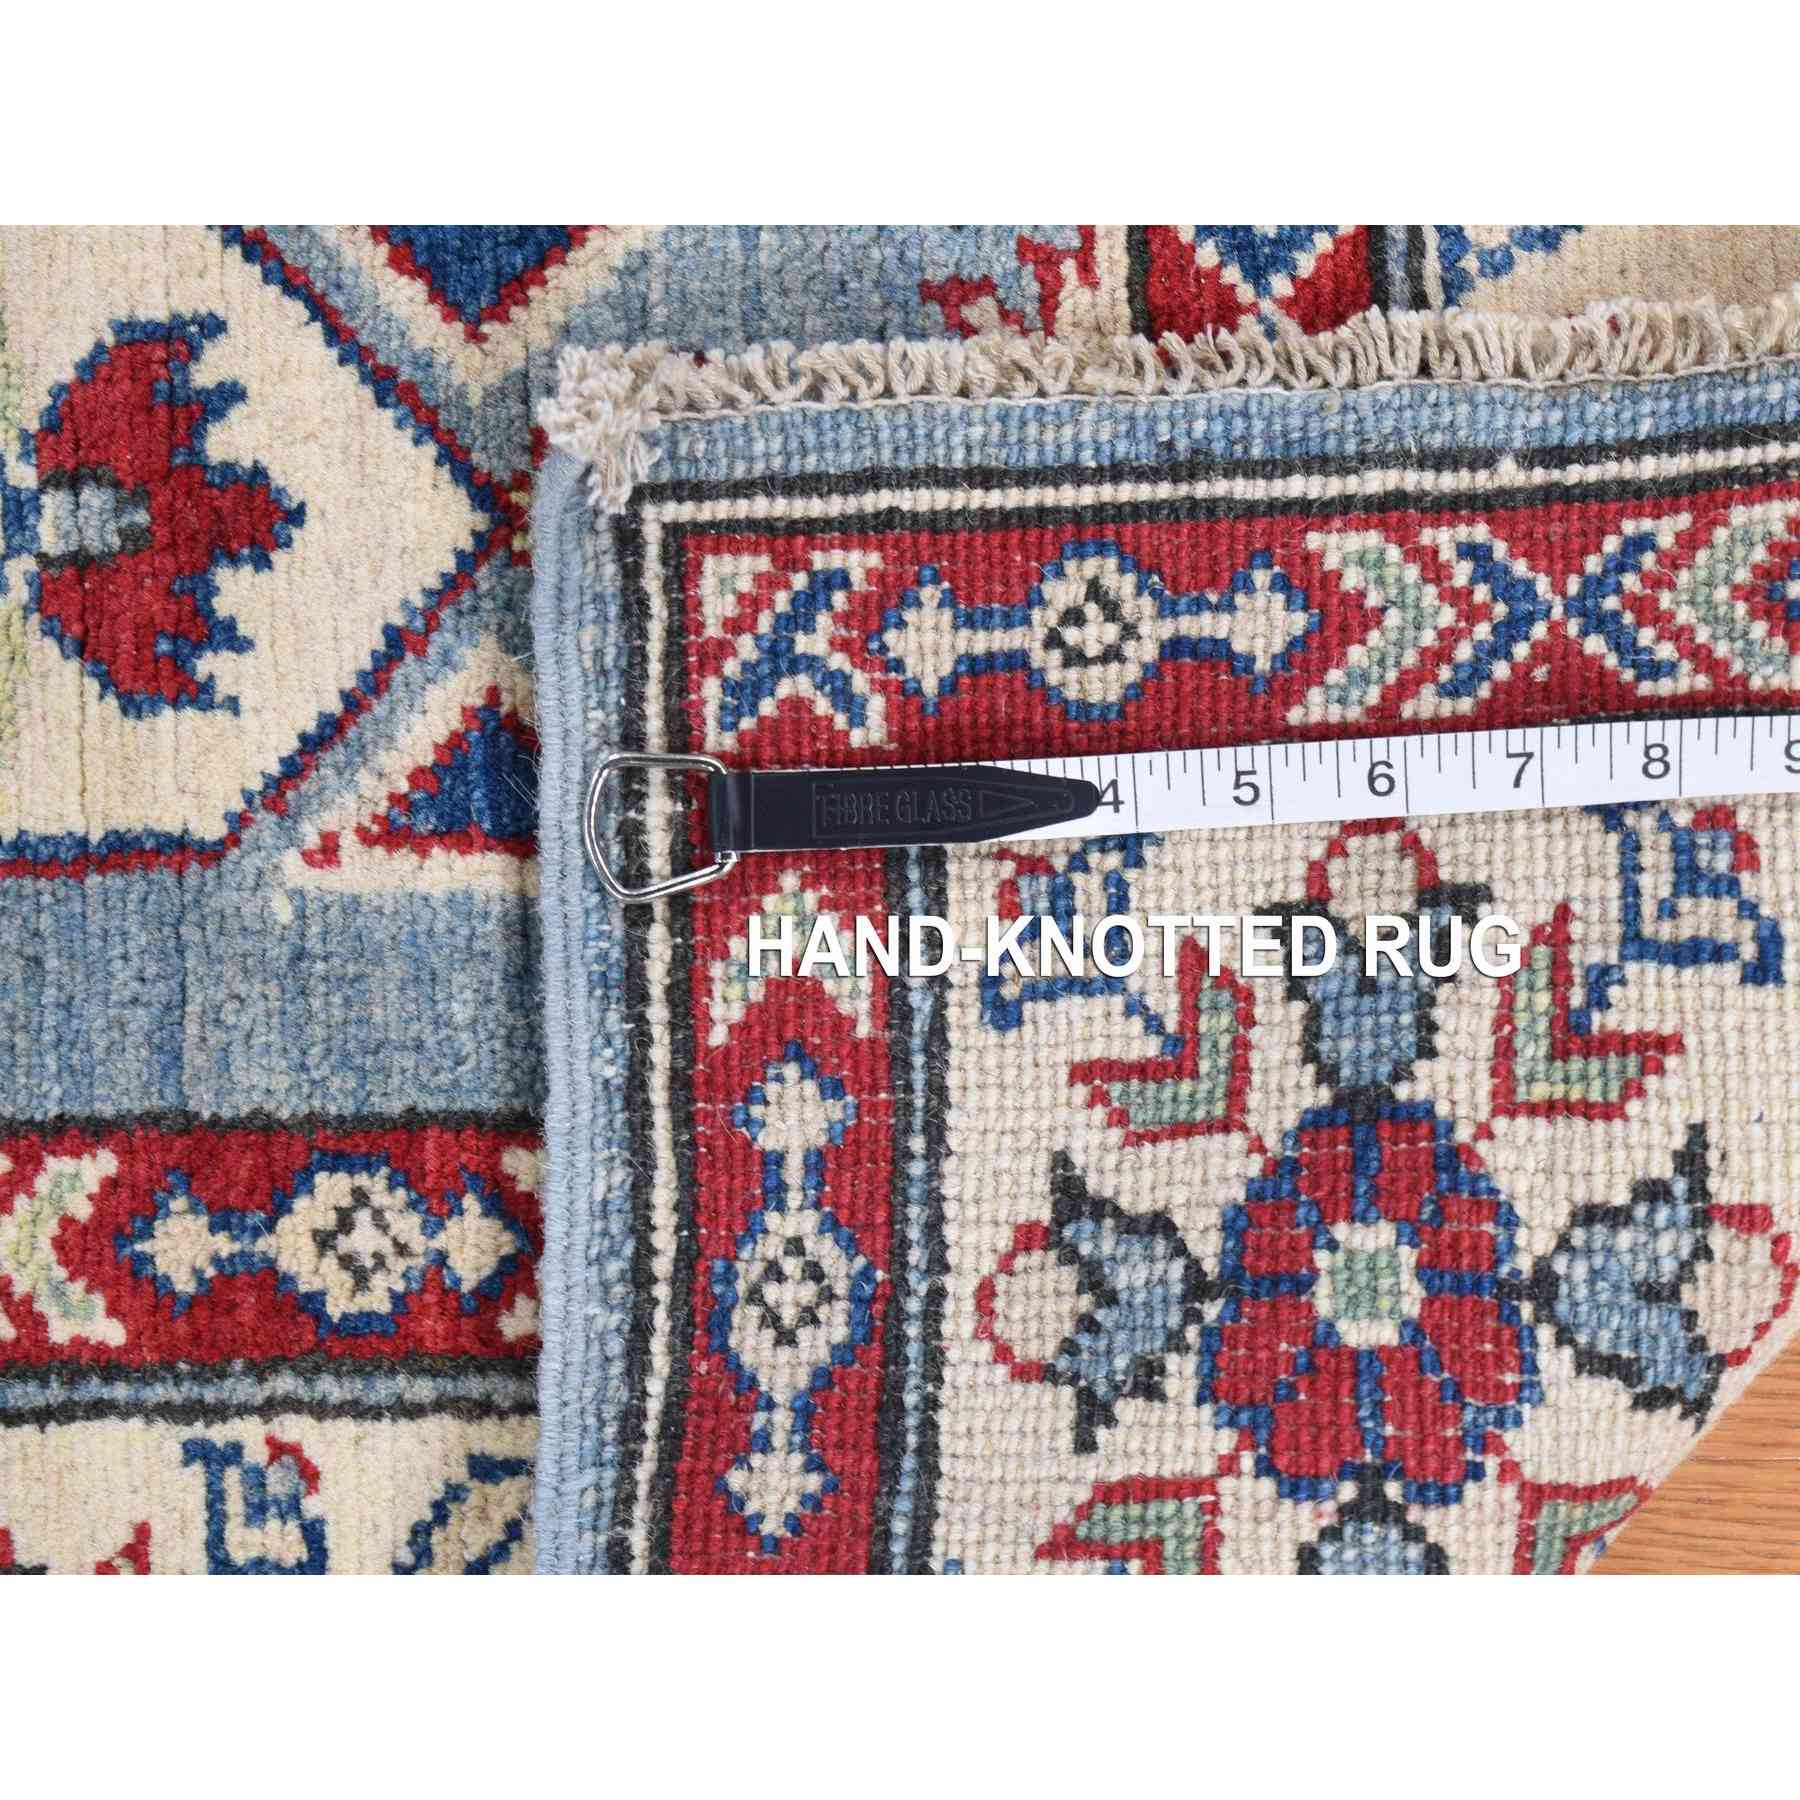 Kazak-Hand-Knotted-Rug-439930